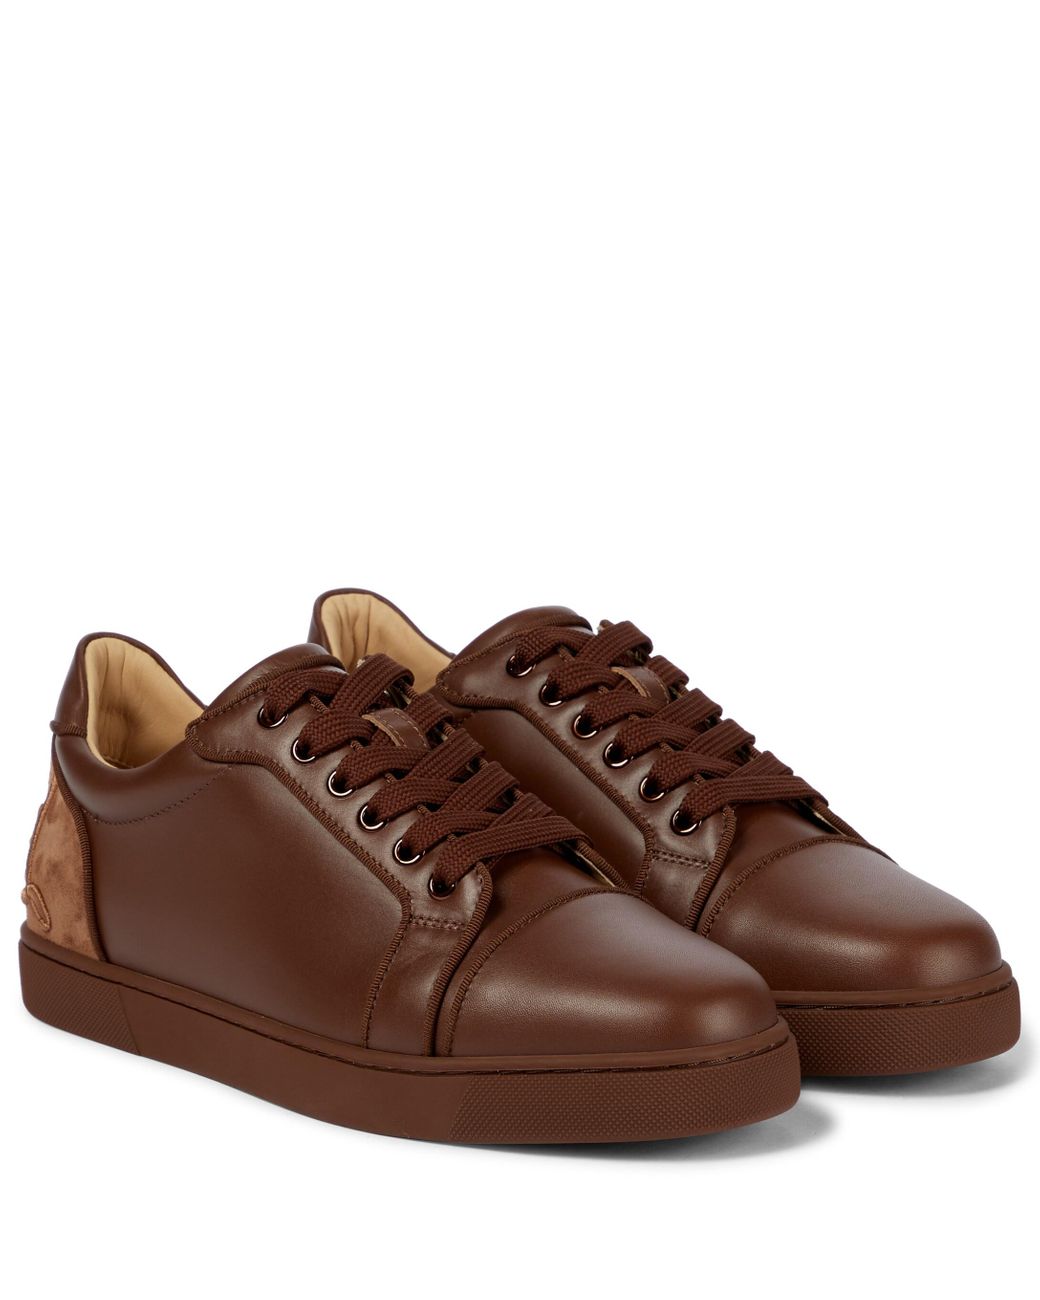 Christian Louboutin Fun Vieira Leather Sneakers in Brown | Lyst